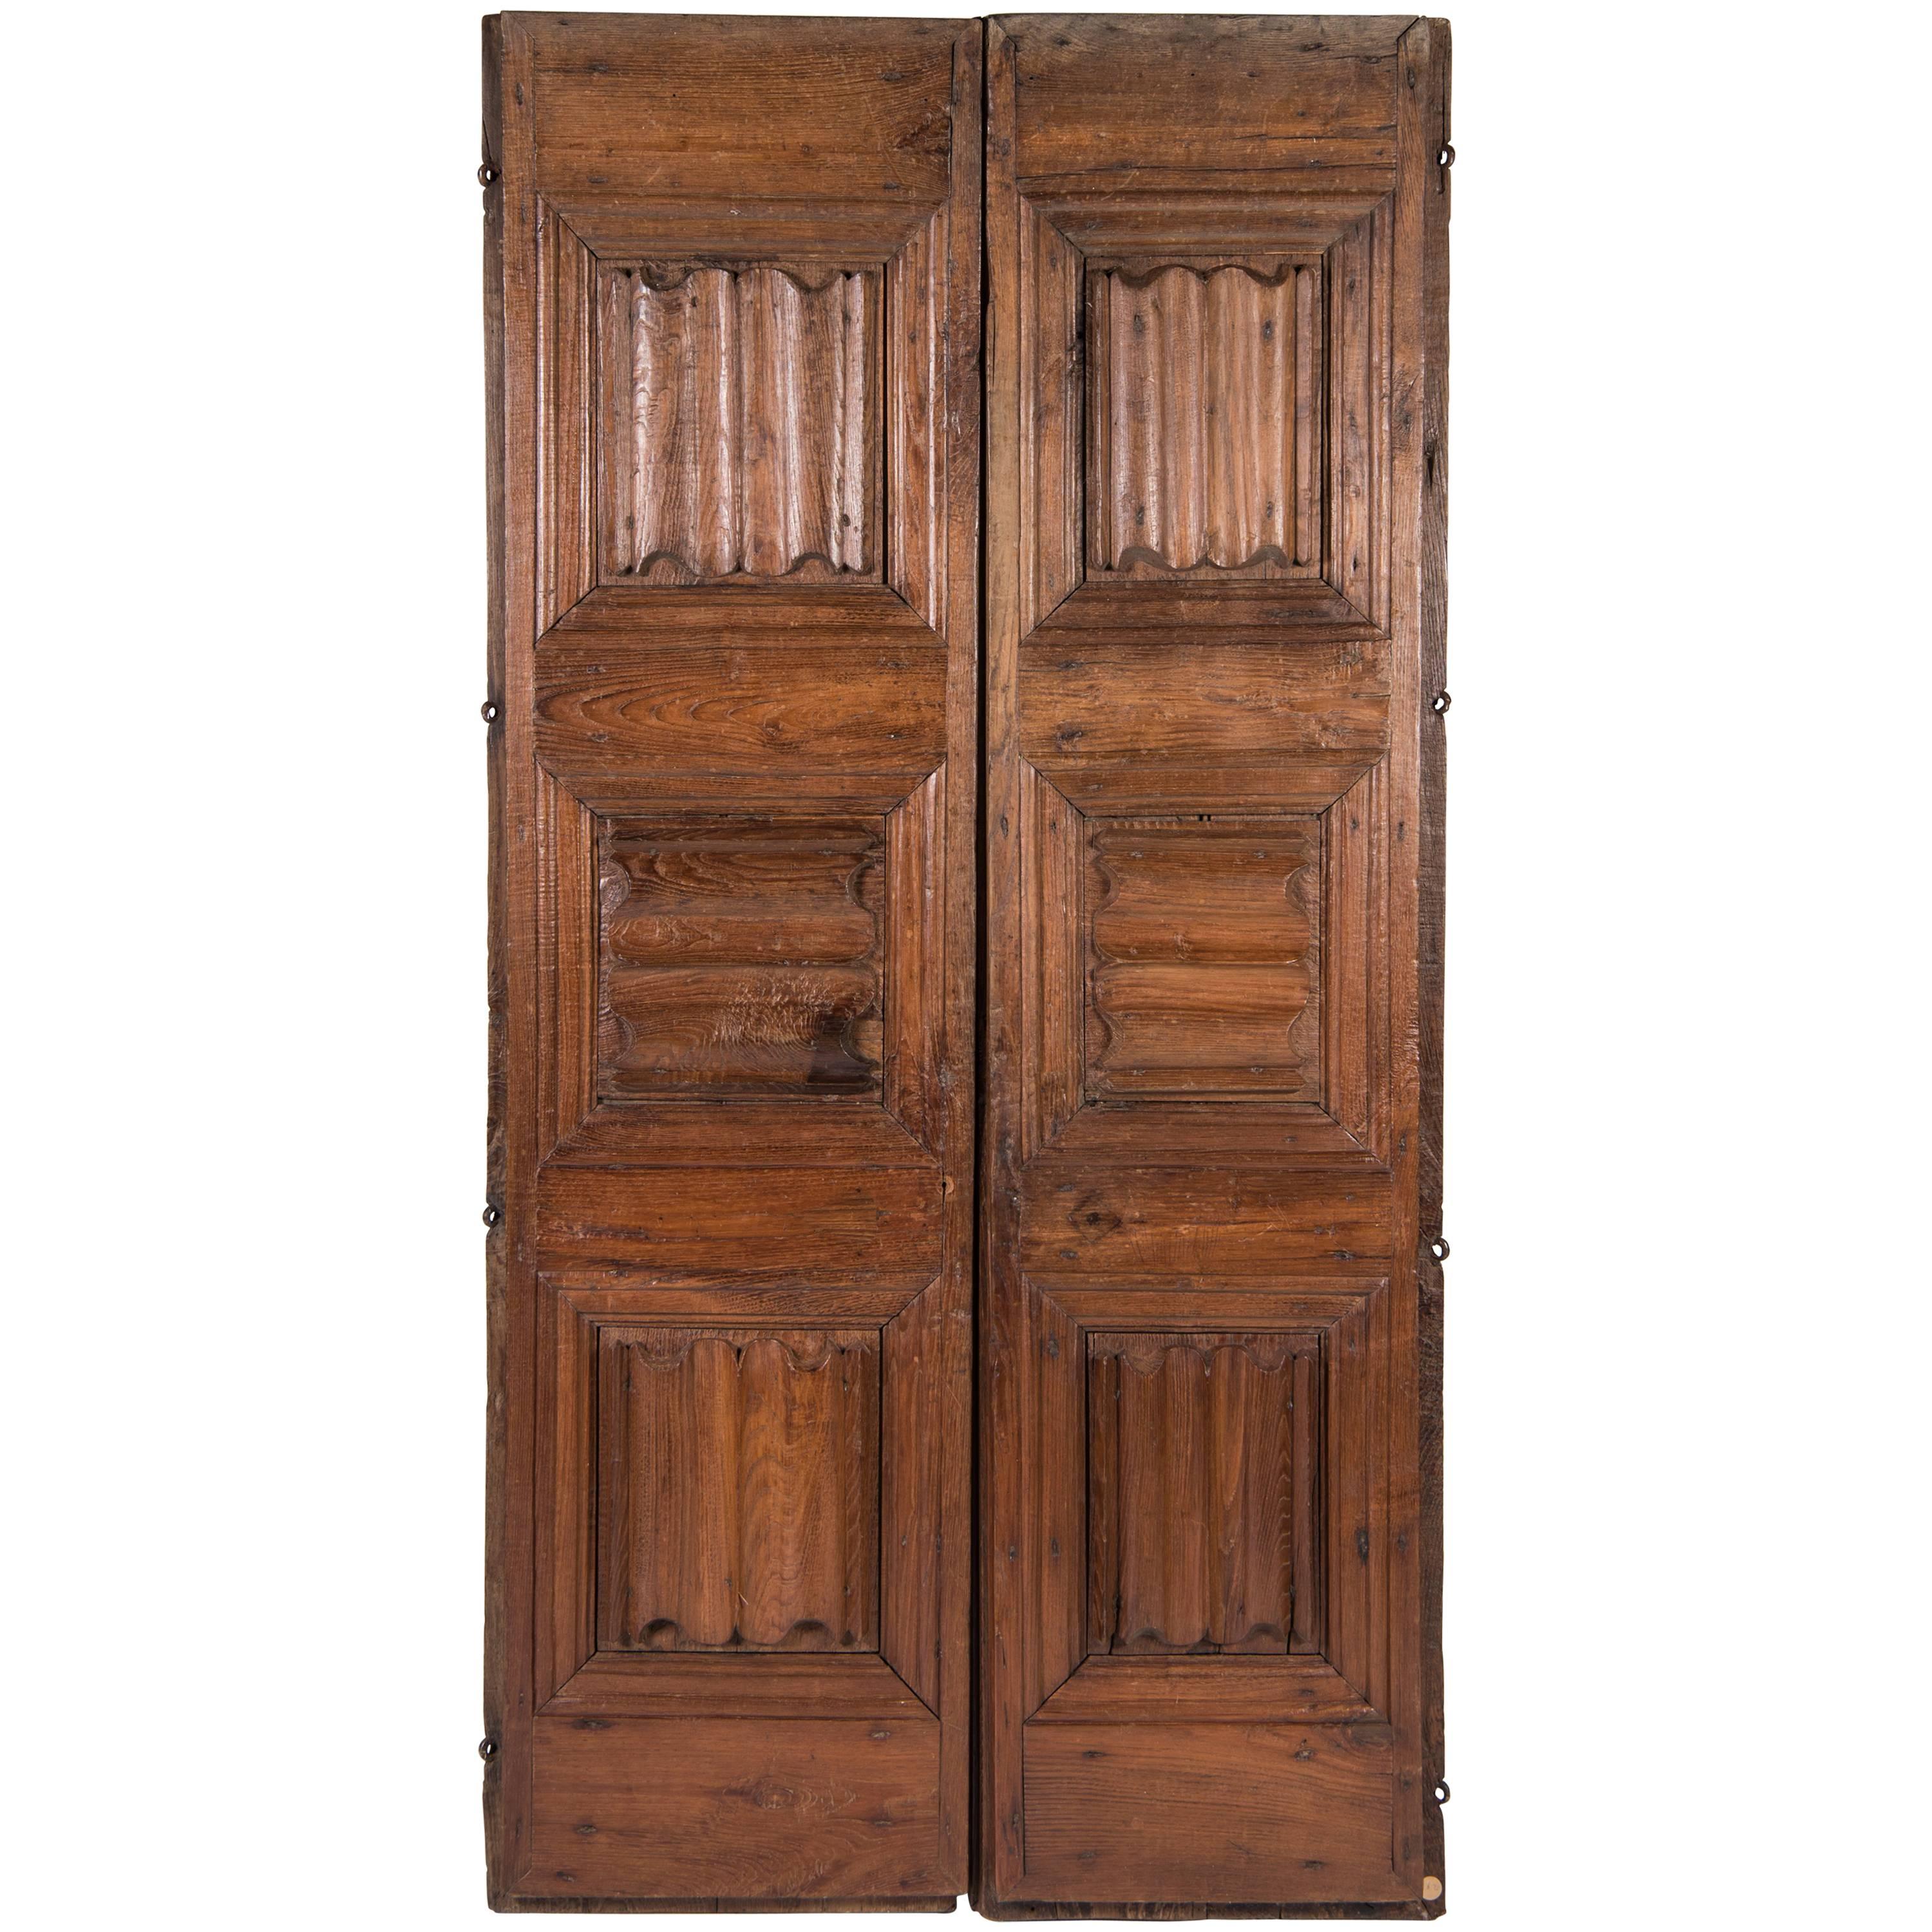 Pair of Handcrafted Wood Doors